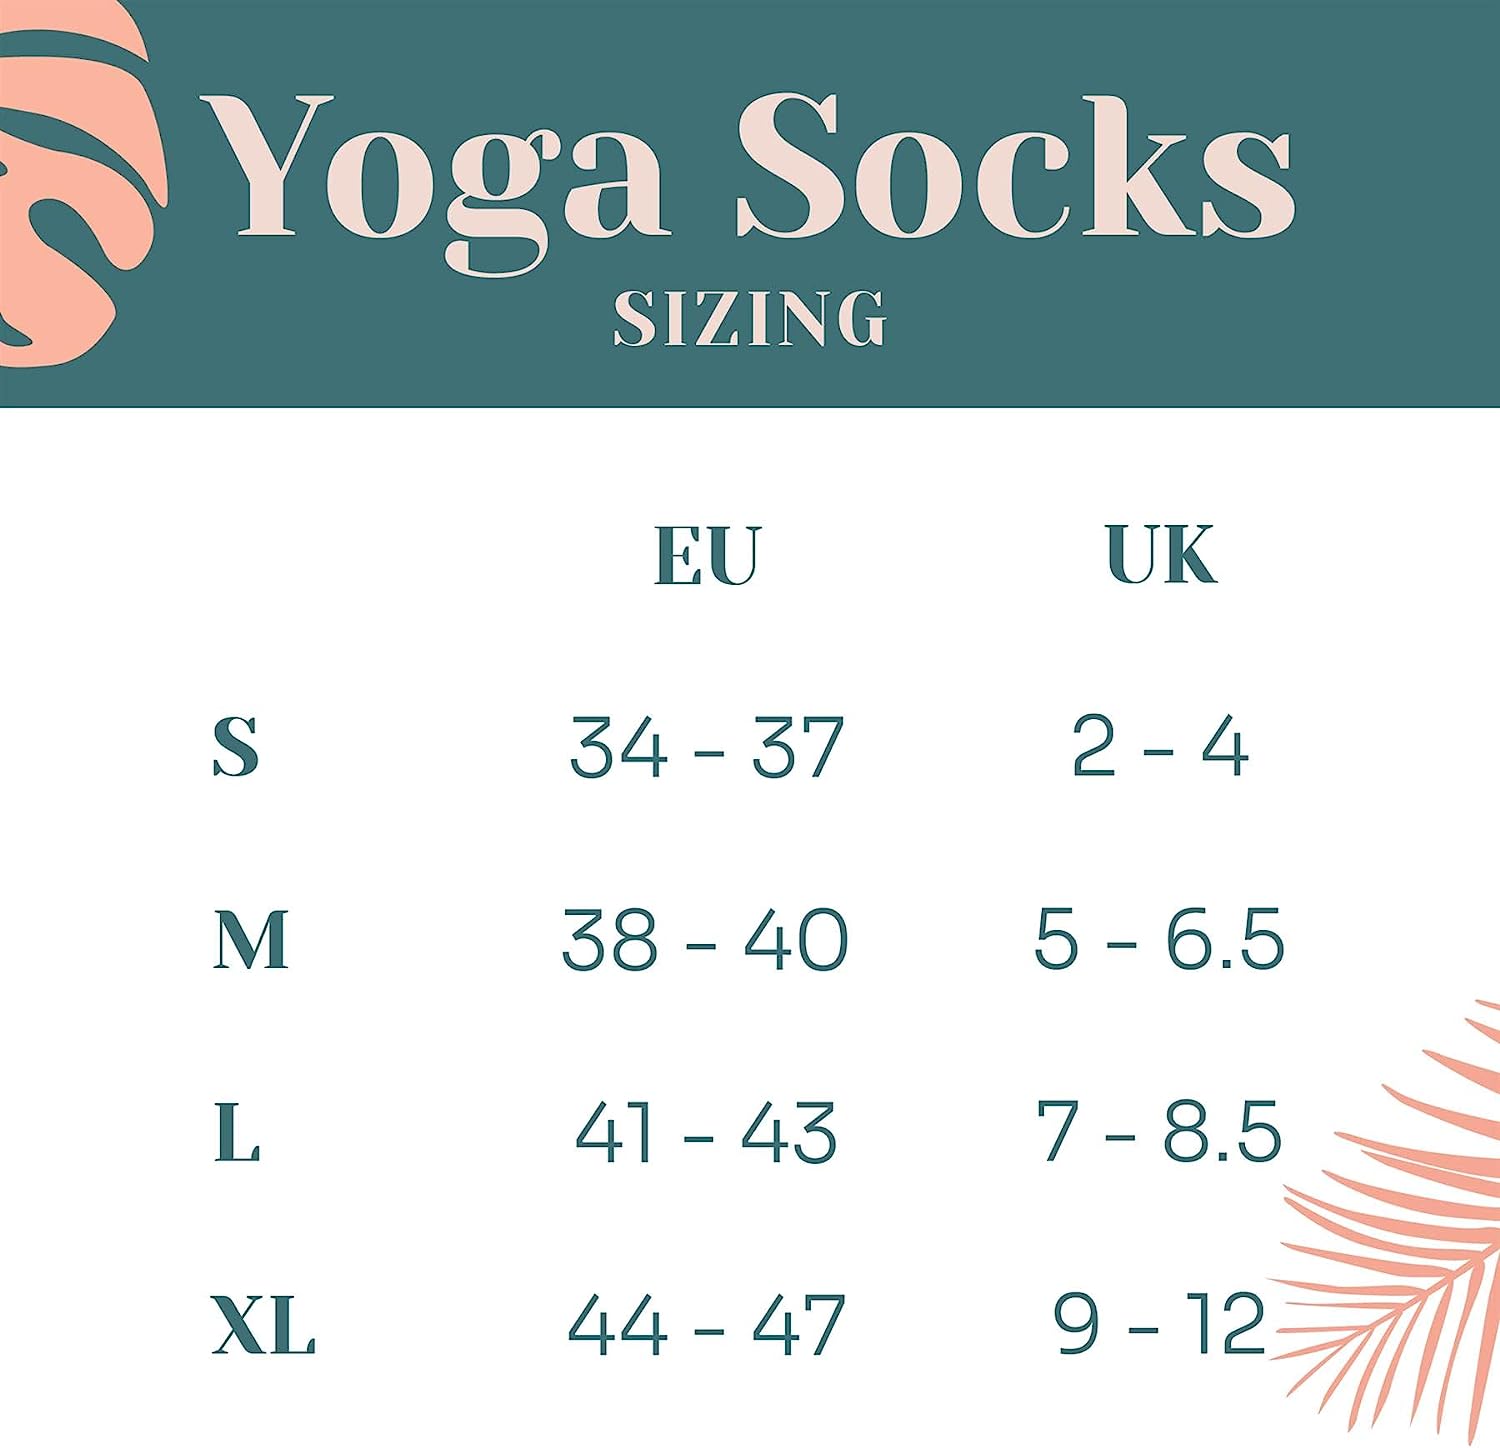 Myga Grip Yoga Socks – Raising Arrows NOC